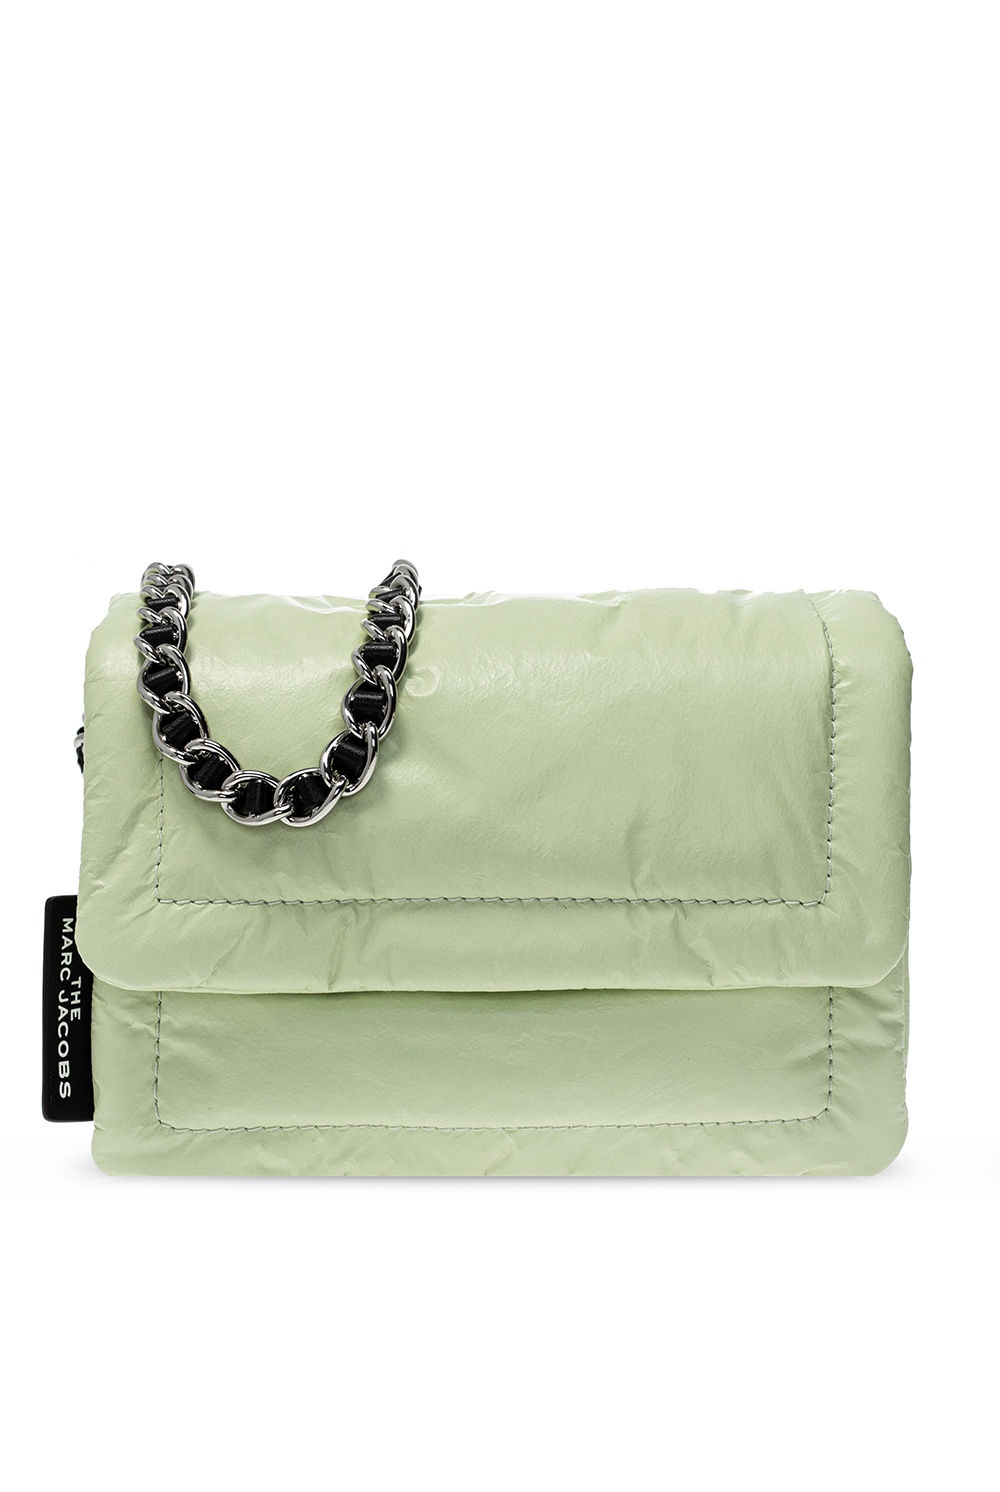 Green 'The Mini Pillow' shoulder bag Marc Jacobs - Vitkac TW